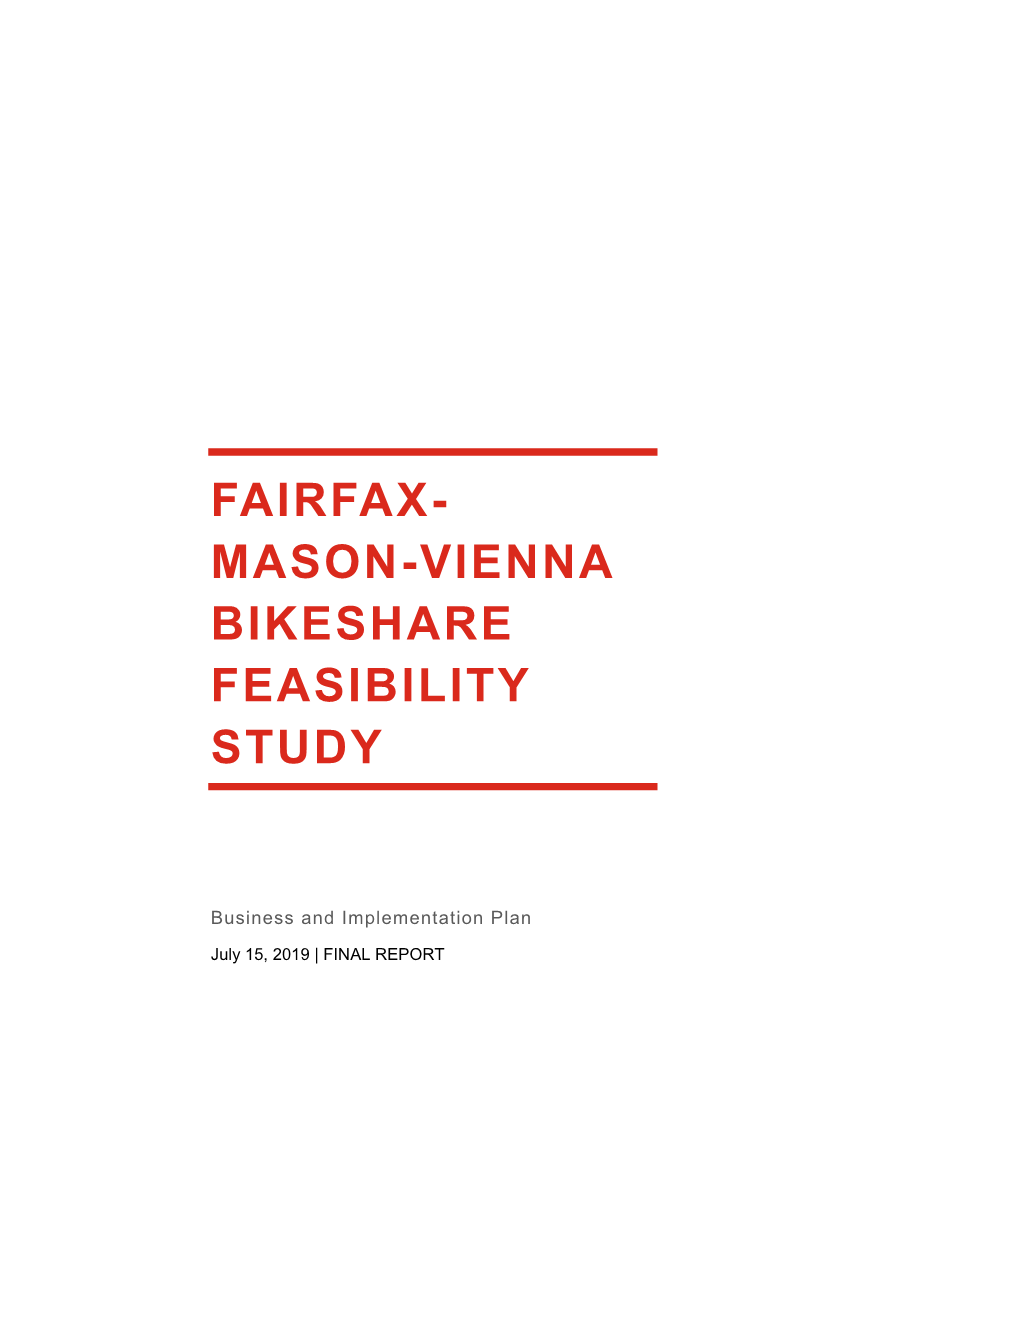 Mason-Vienna Bikeshare Feasibility Study